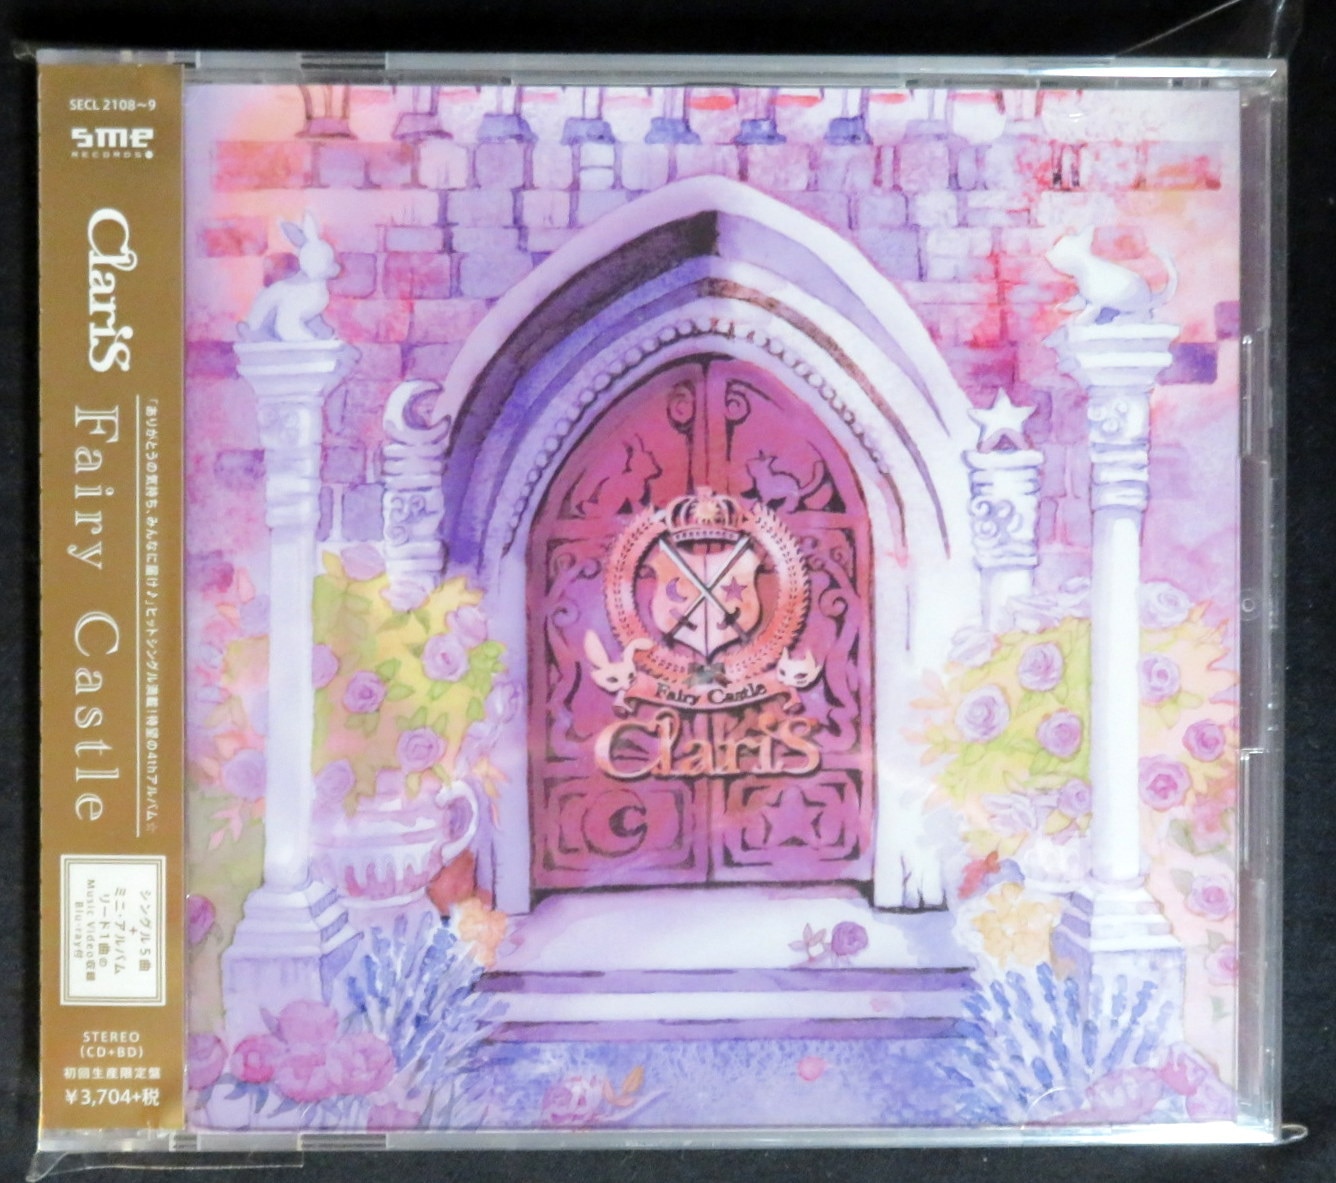 ClariS アルバム Fairy Castle CD - アニメ